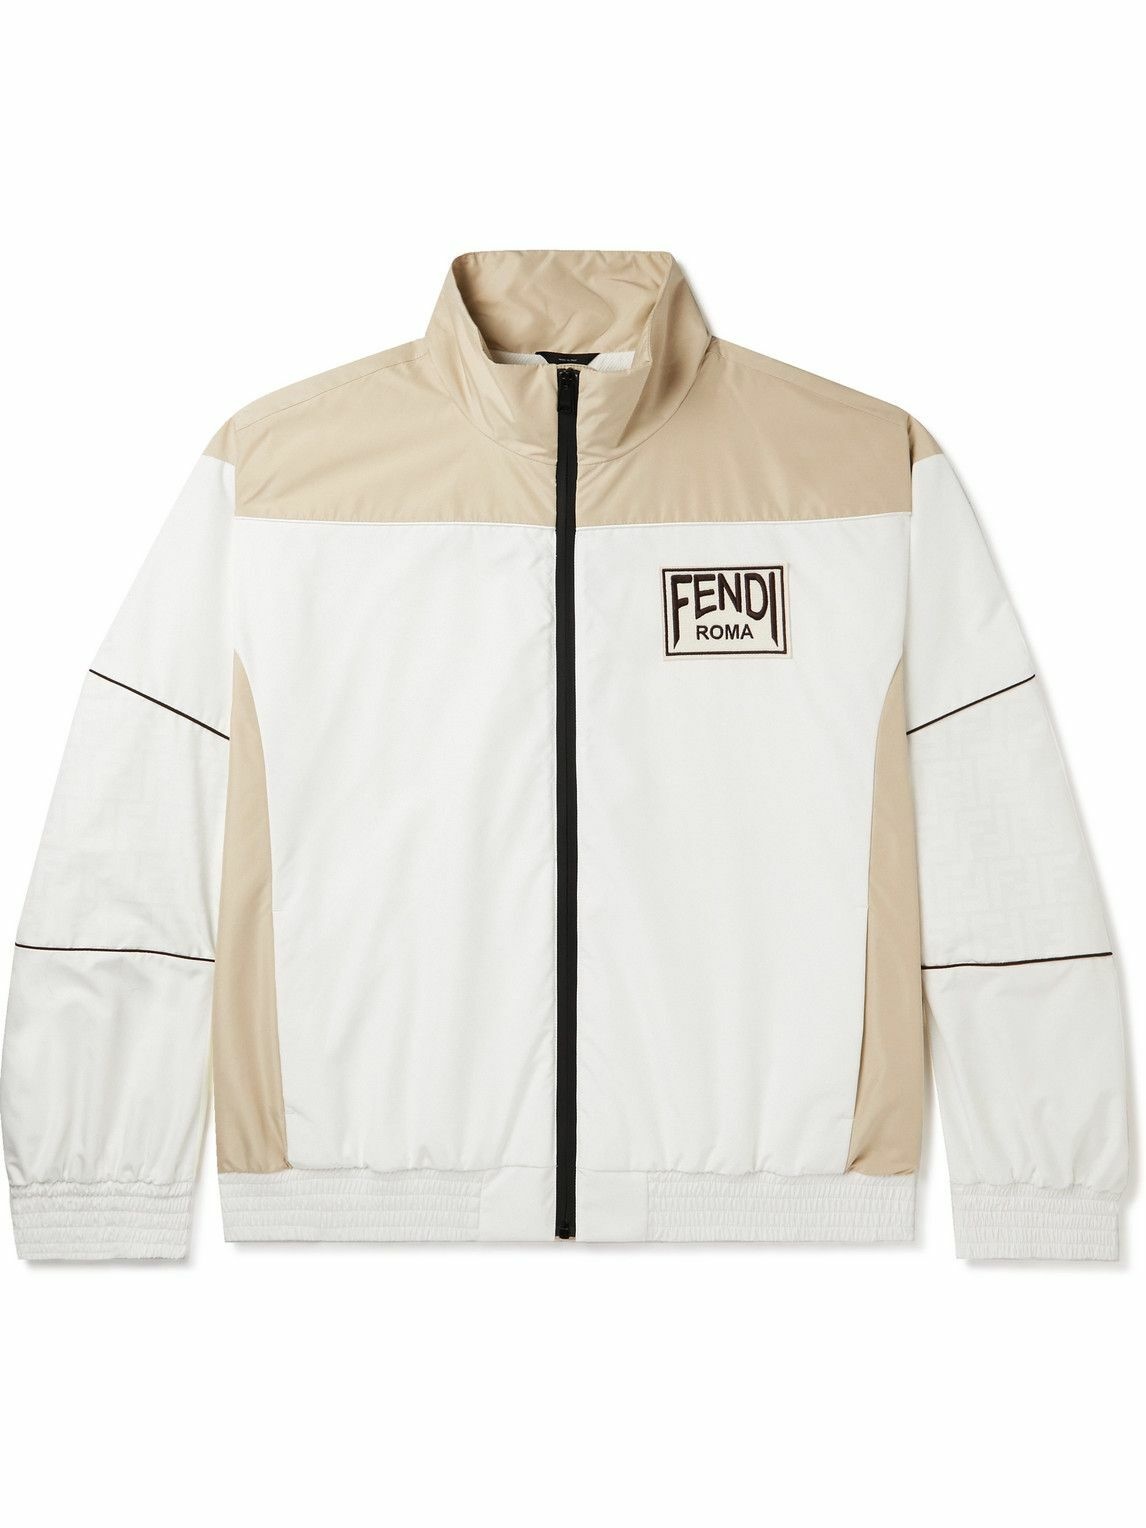 Fendi - Reversible Monogram Logo-Jacquard Two-Tone Shell and Mesh Jacket -  White Fendi